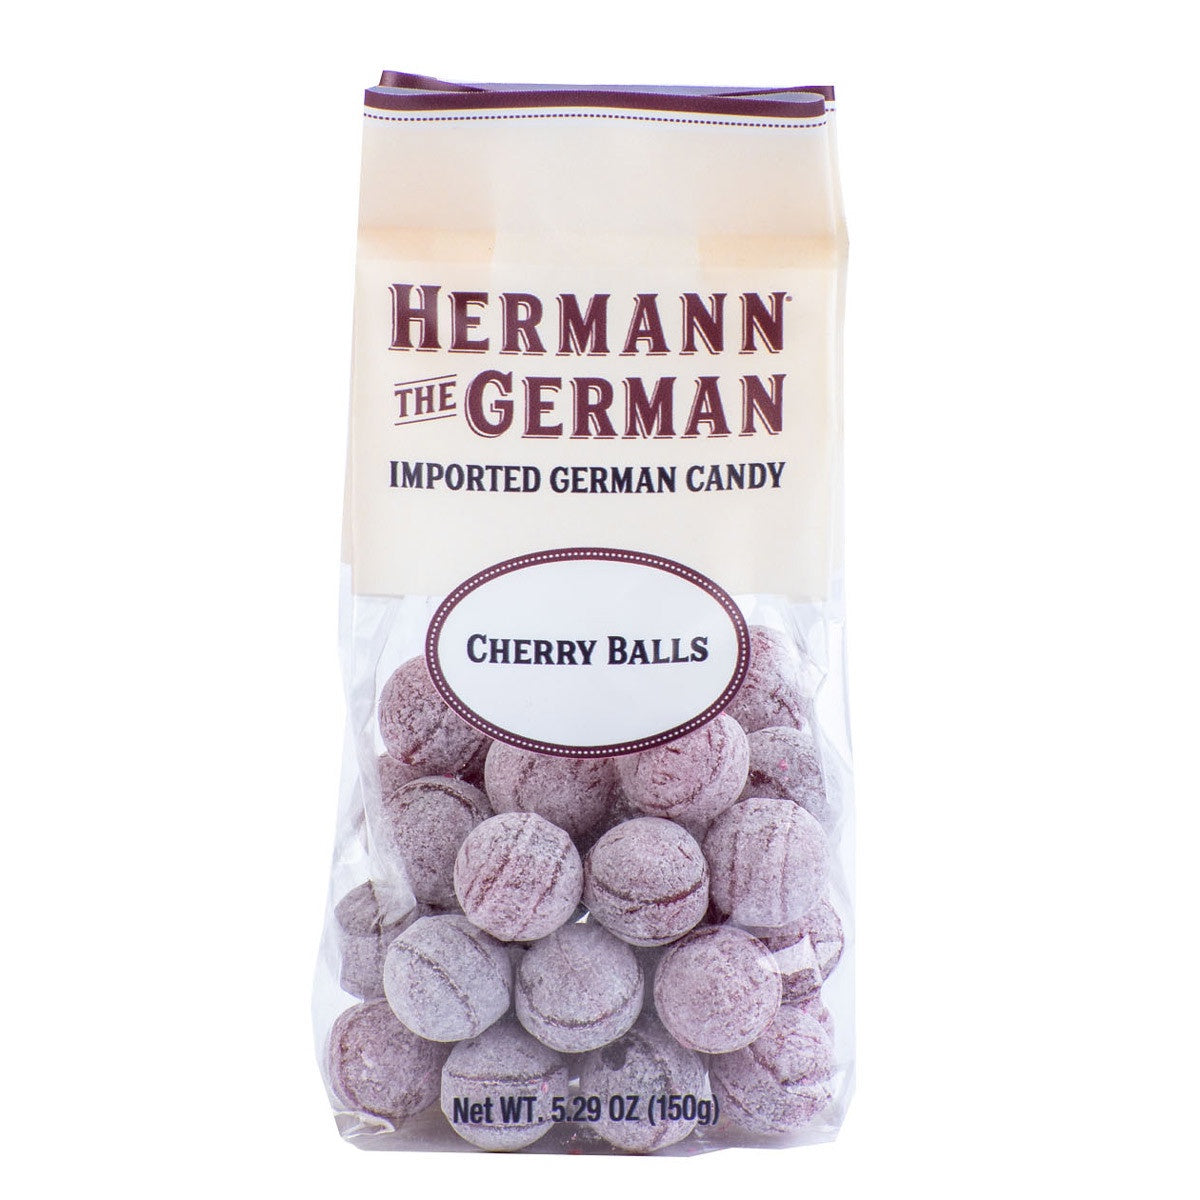 Hermann the German Cherry Balls Candy, 5.29oz